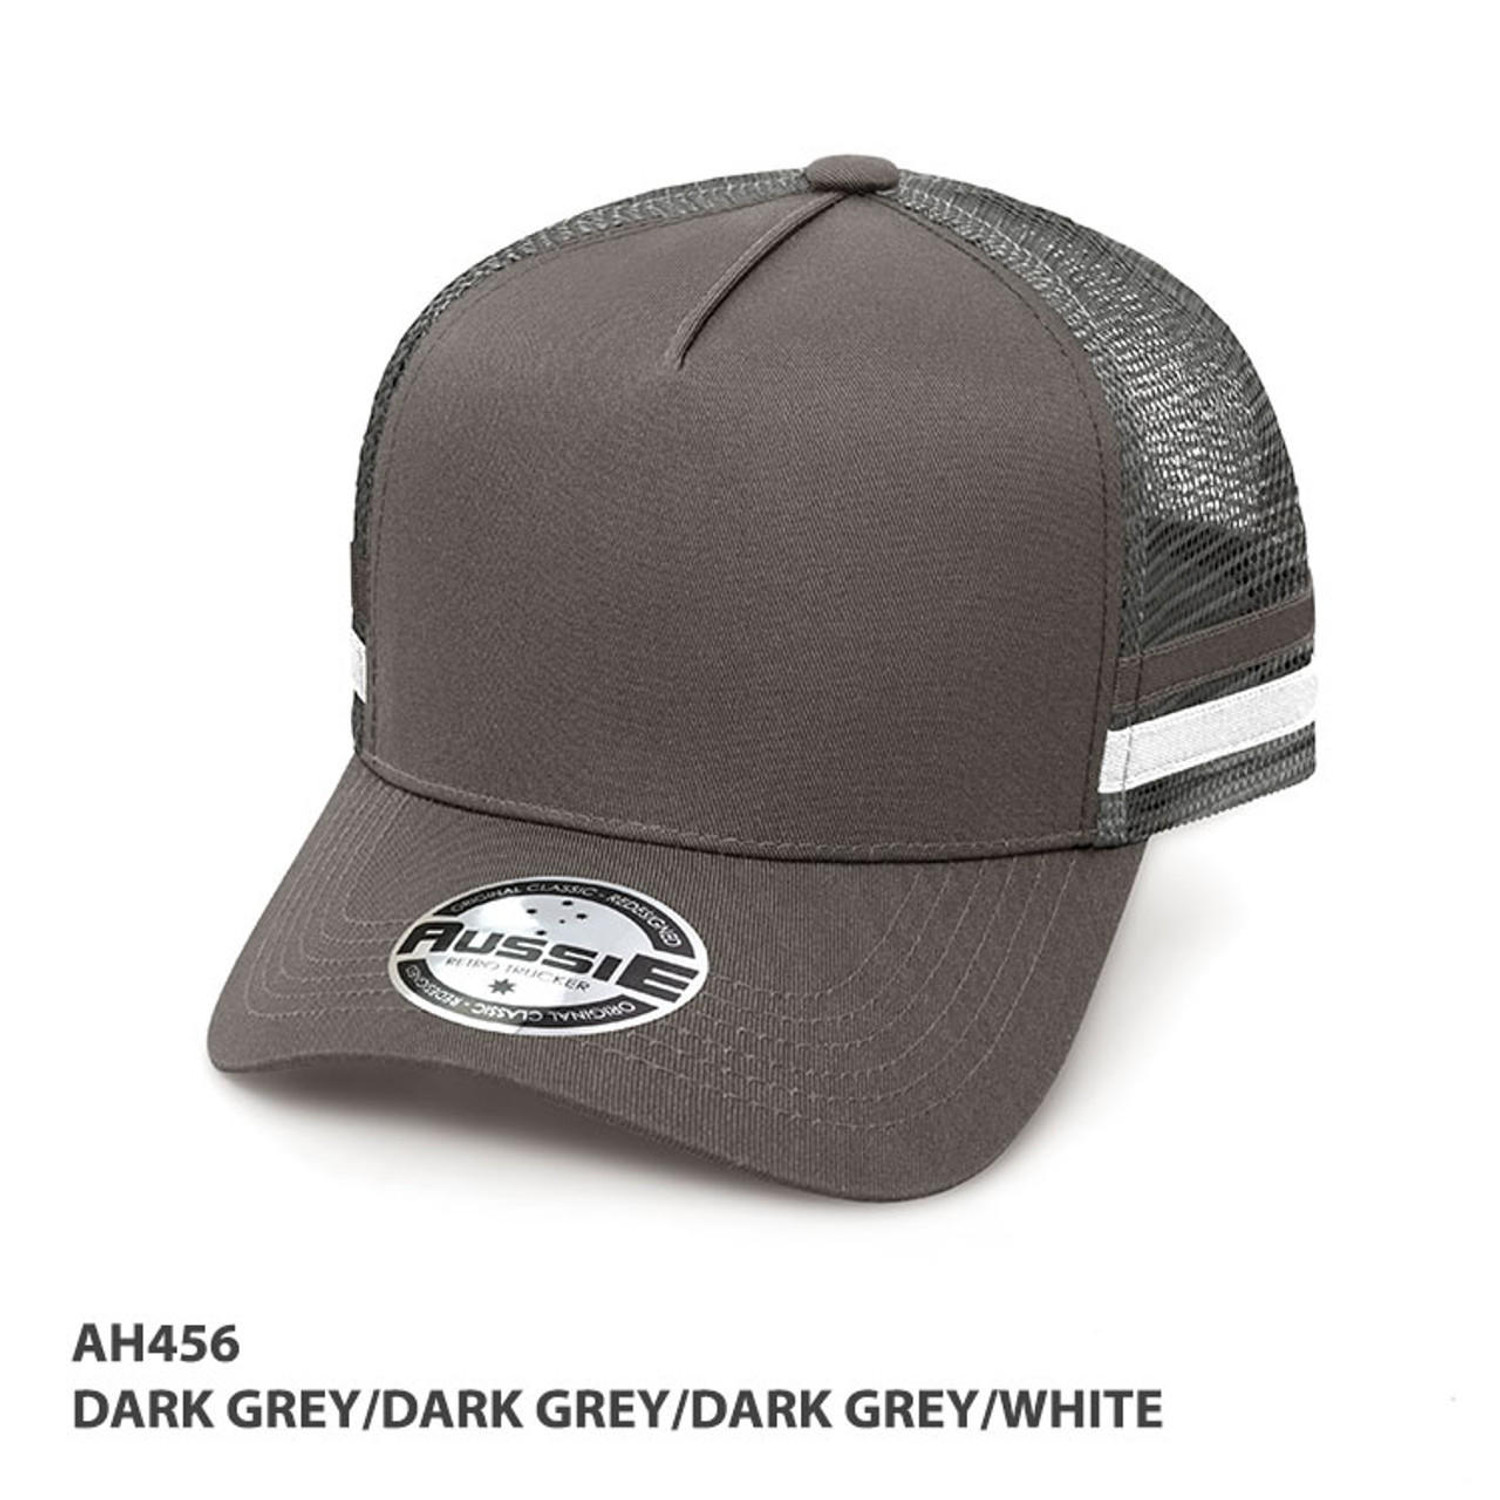  FREE EMBROIDERY - Trucker Cap in Dark Grey/White (Buy 20+) 